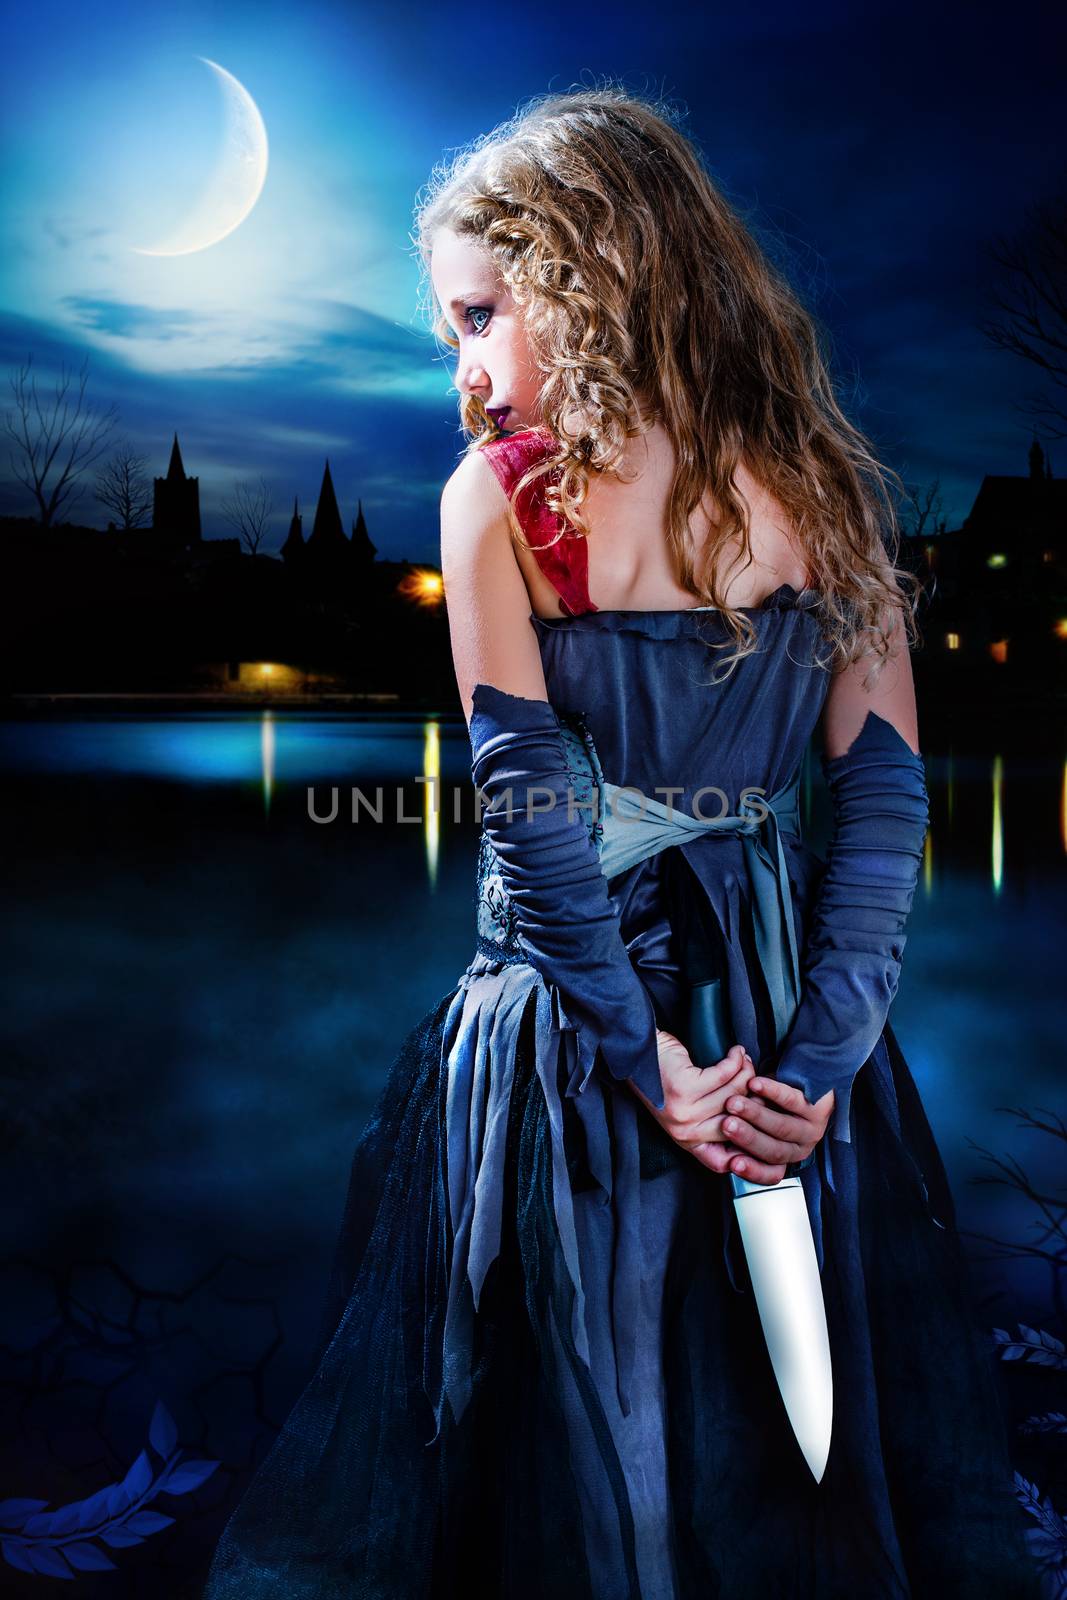 Terror girl holding knife at moonlit lake. by karelnoppe